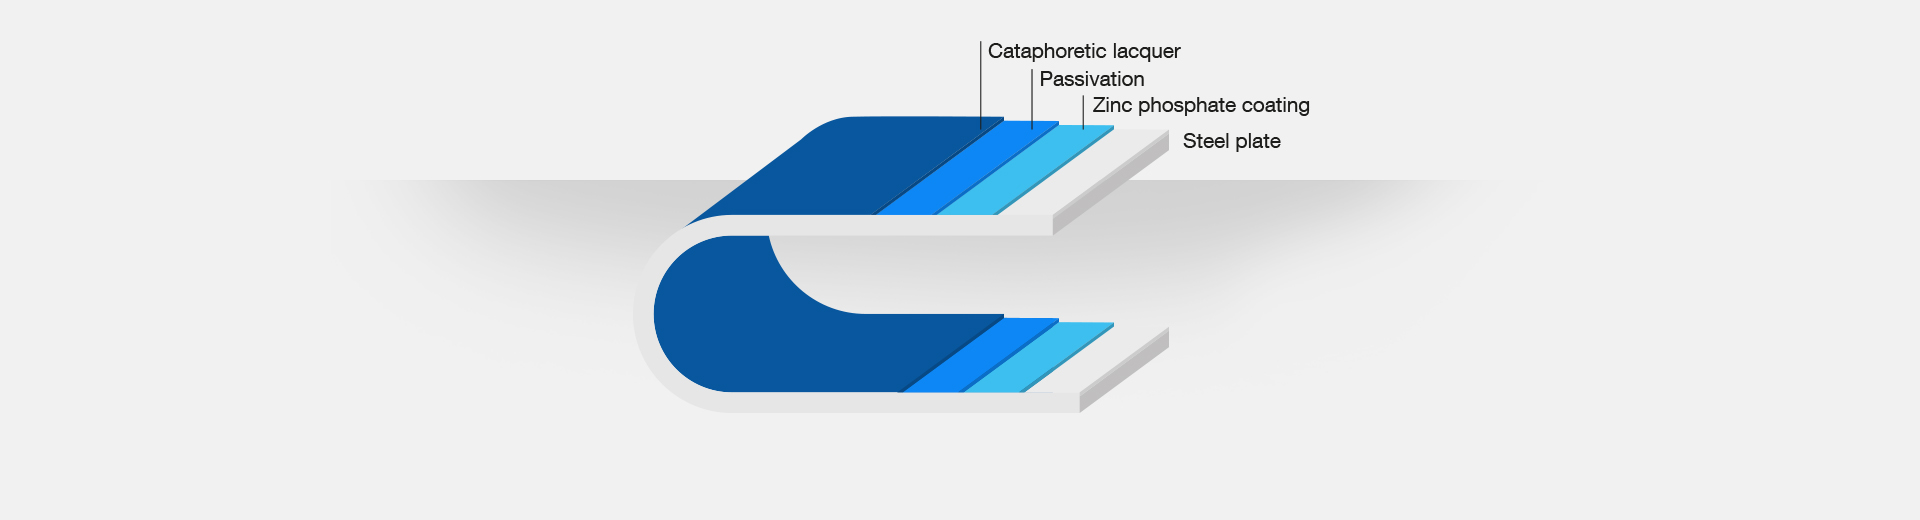 Technological process of cataphoresis